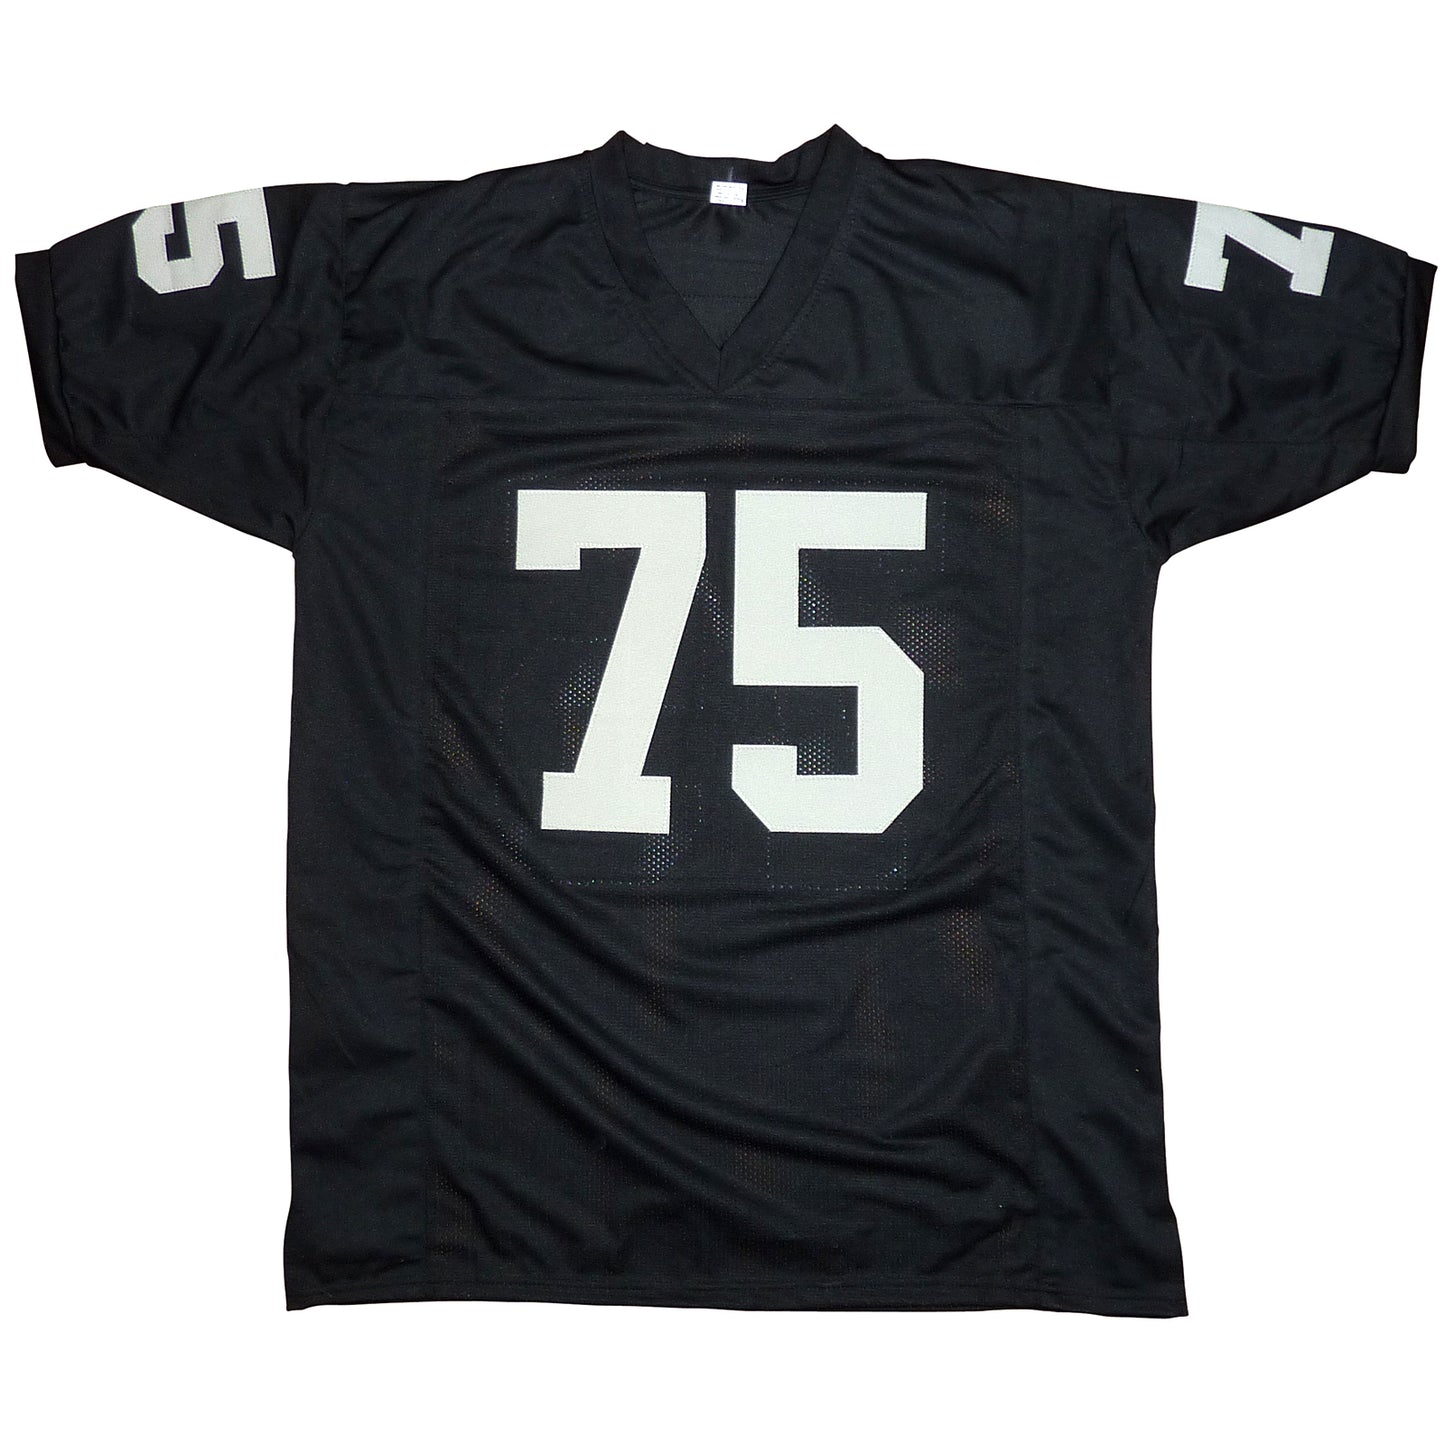 Howie Long Autographed Oakland Raiders (Black #75) Jersey - BAS